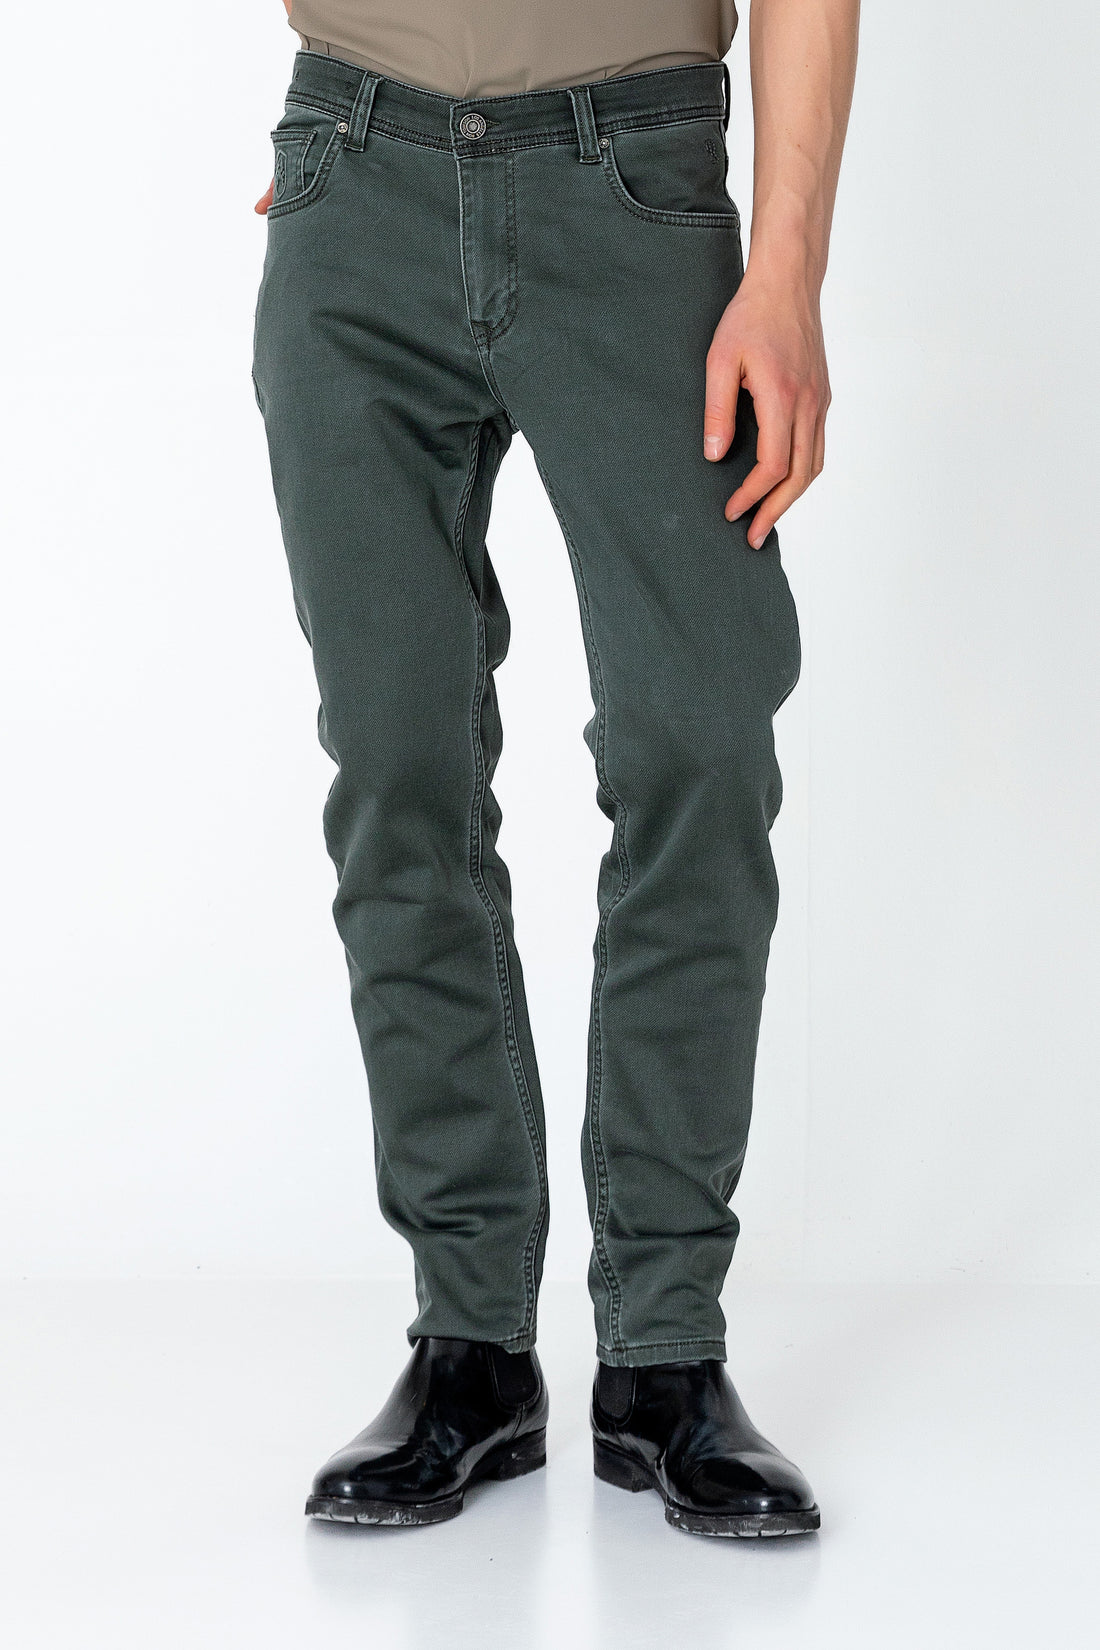 Super Soft 5-pocket Style Pants - Khaki